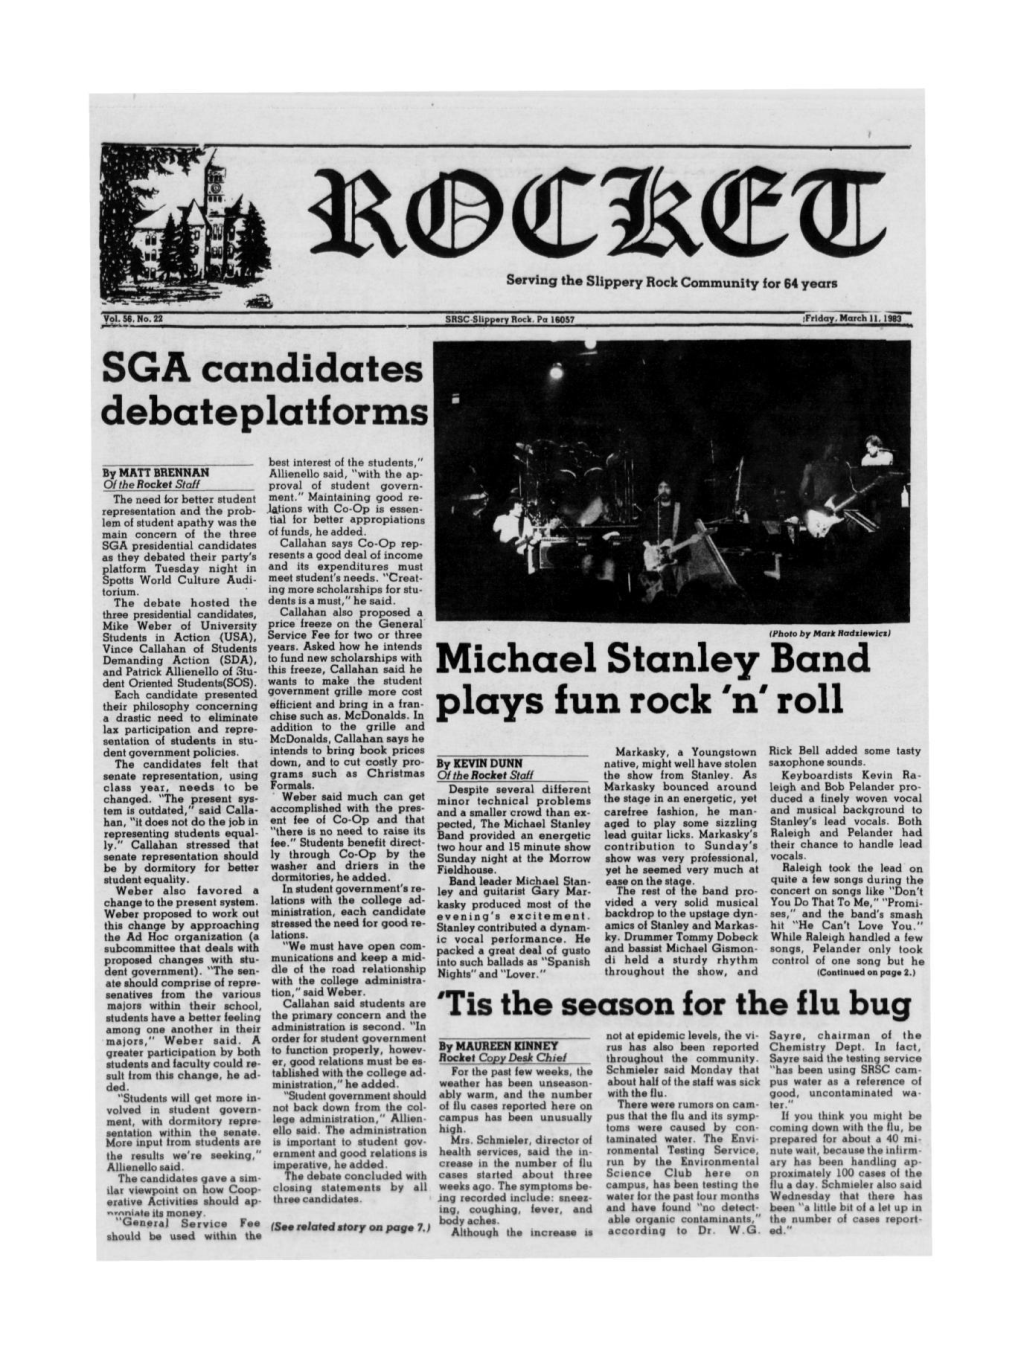 SGA Debateplatforms Michael Stanley Band Plays Fun Rock